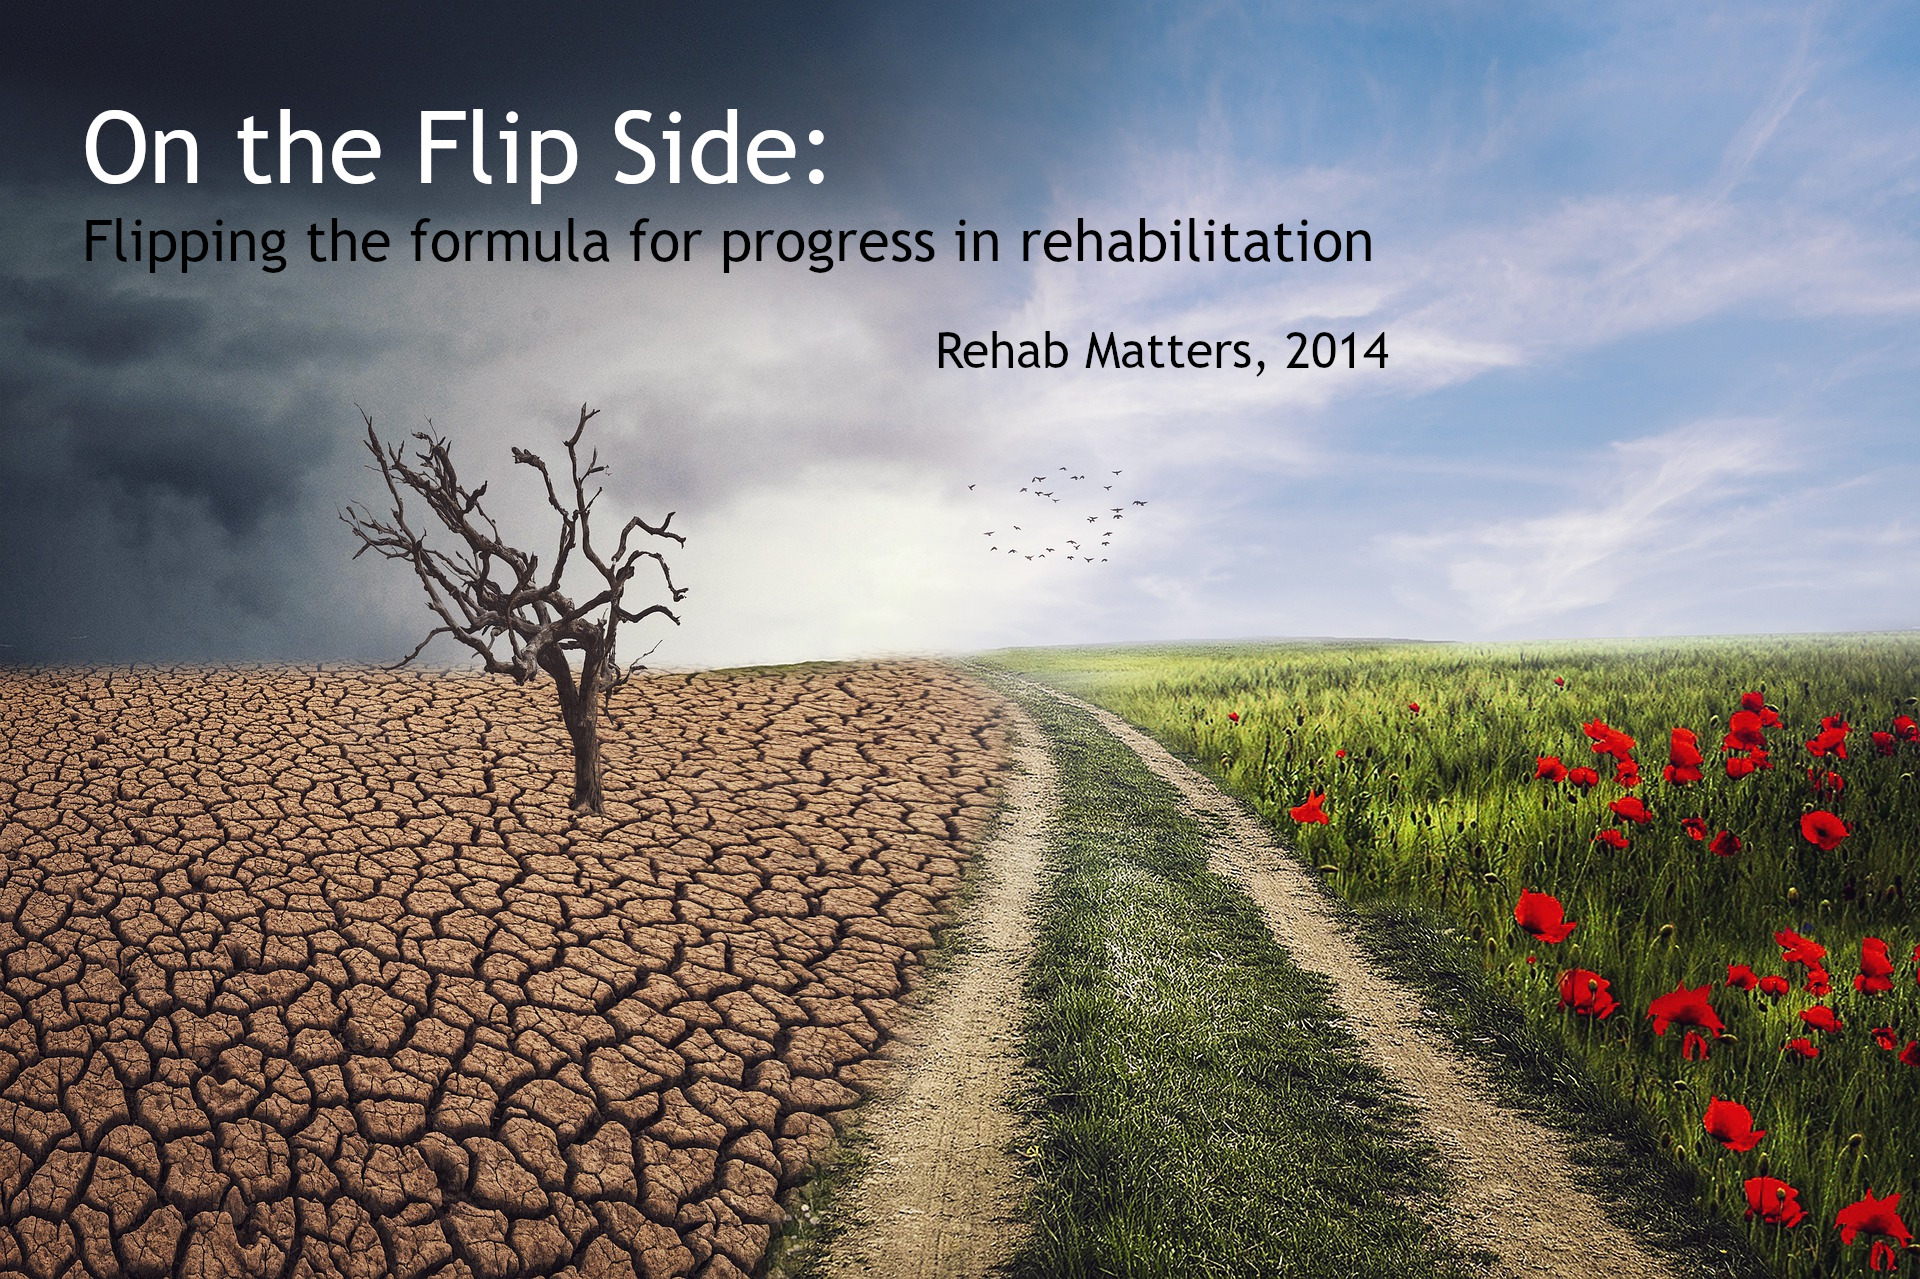 On the Flip Side: Flipping the formula for progress in rehabilitation